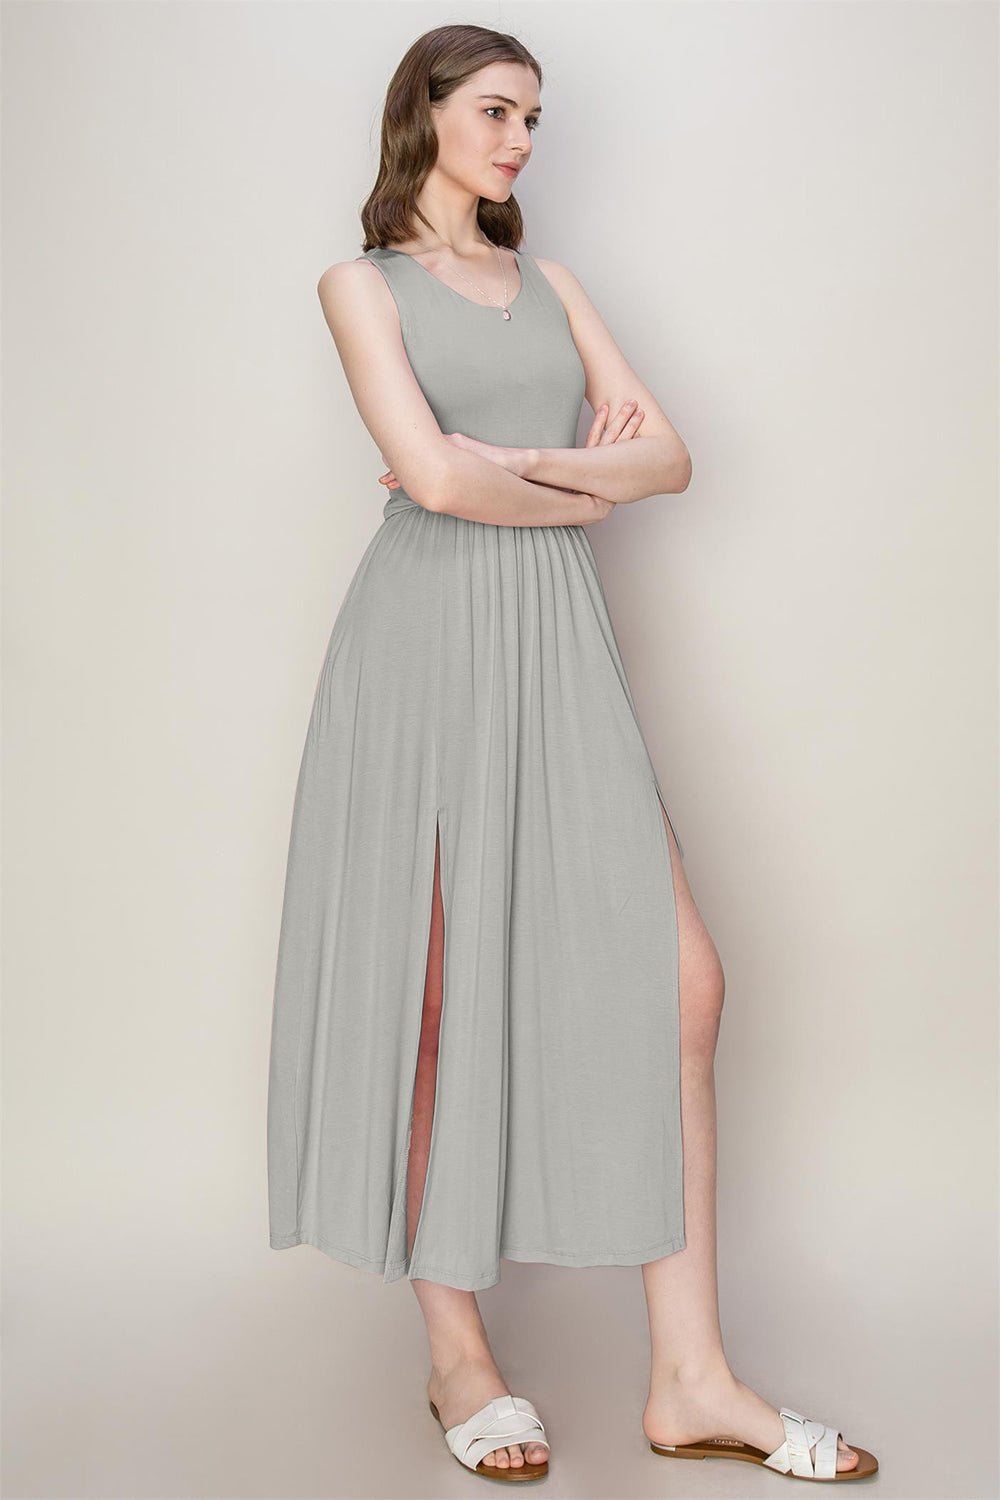 HYFVE Sleeveless Slit Midi Dress - Happily Ever Atchison Shop Co.